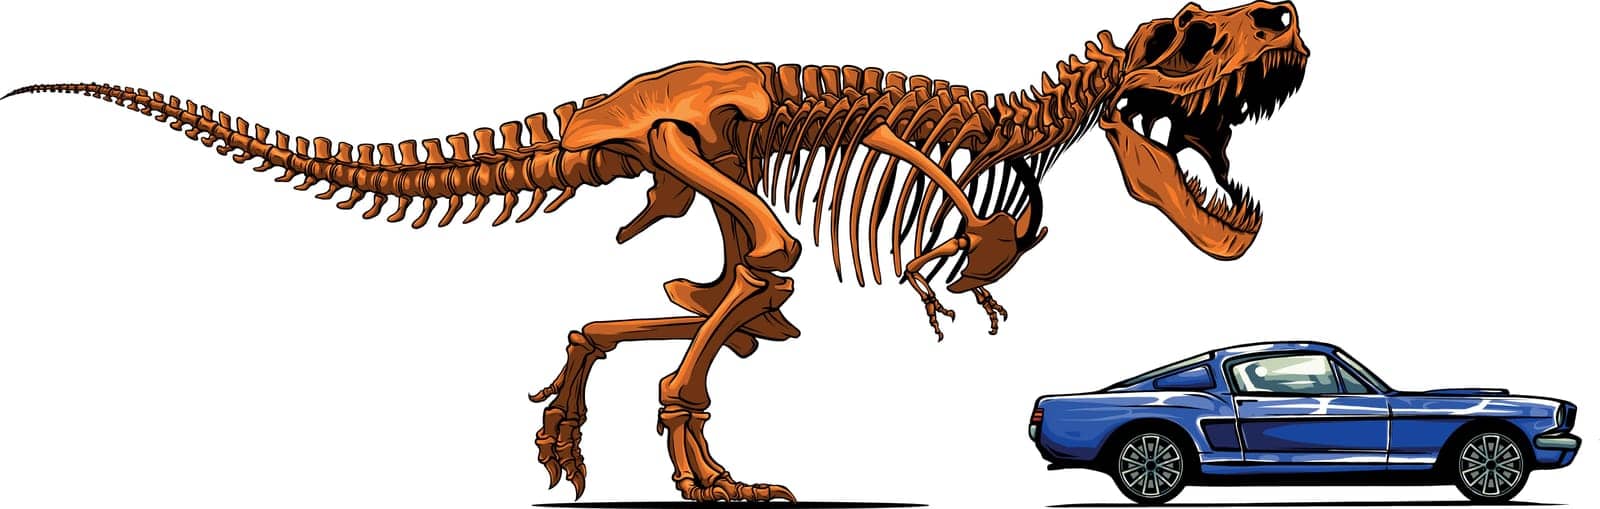 vector illustration of skeleton dinousaur chase car by dean